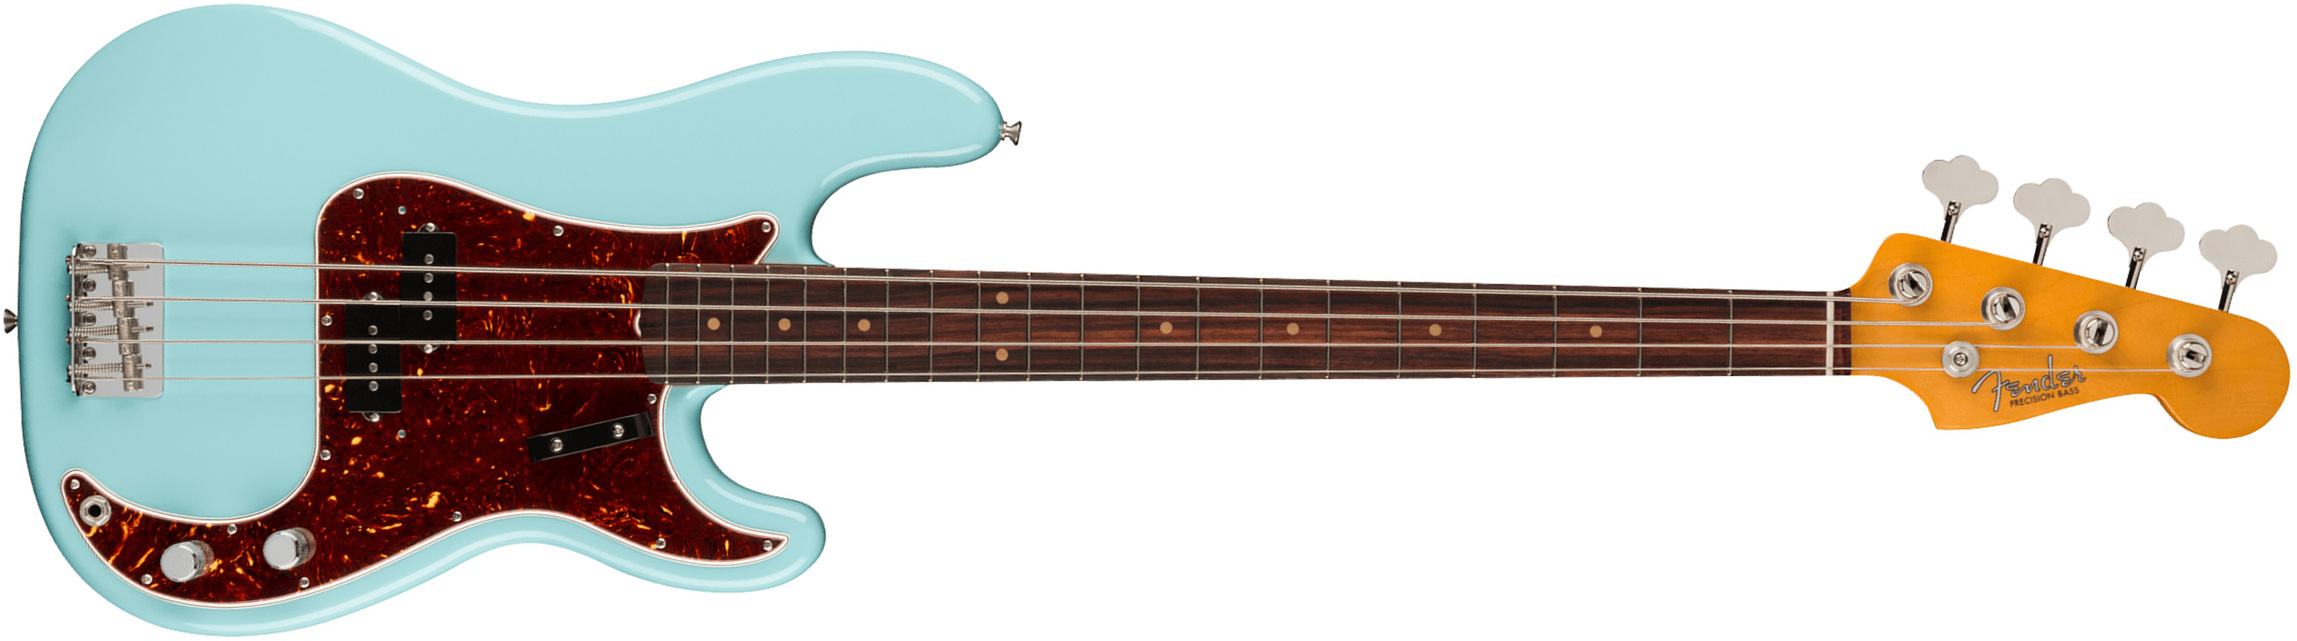 Fender Precision Bass 1960 American Vintage Ii Usa Rw - Daphne Blue - Basse Électrique Solid Body - Main picture